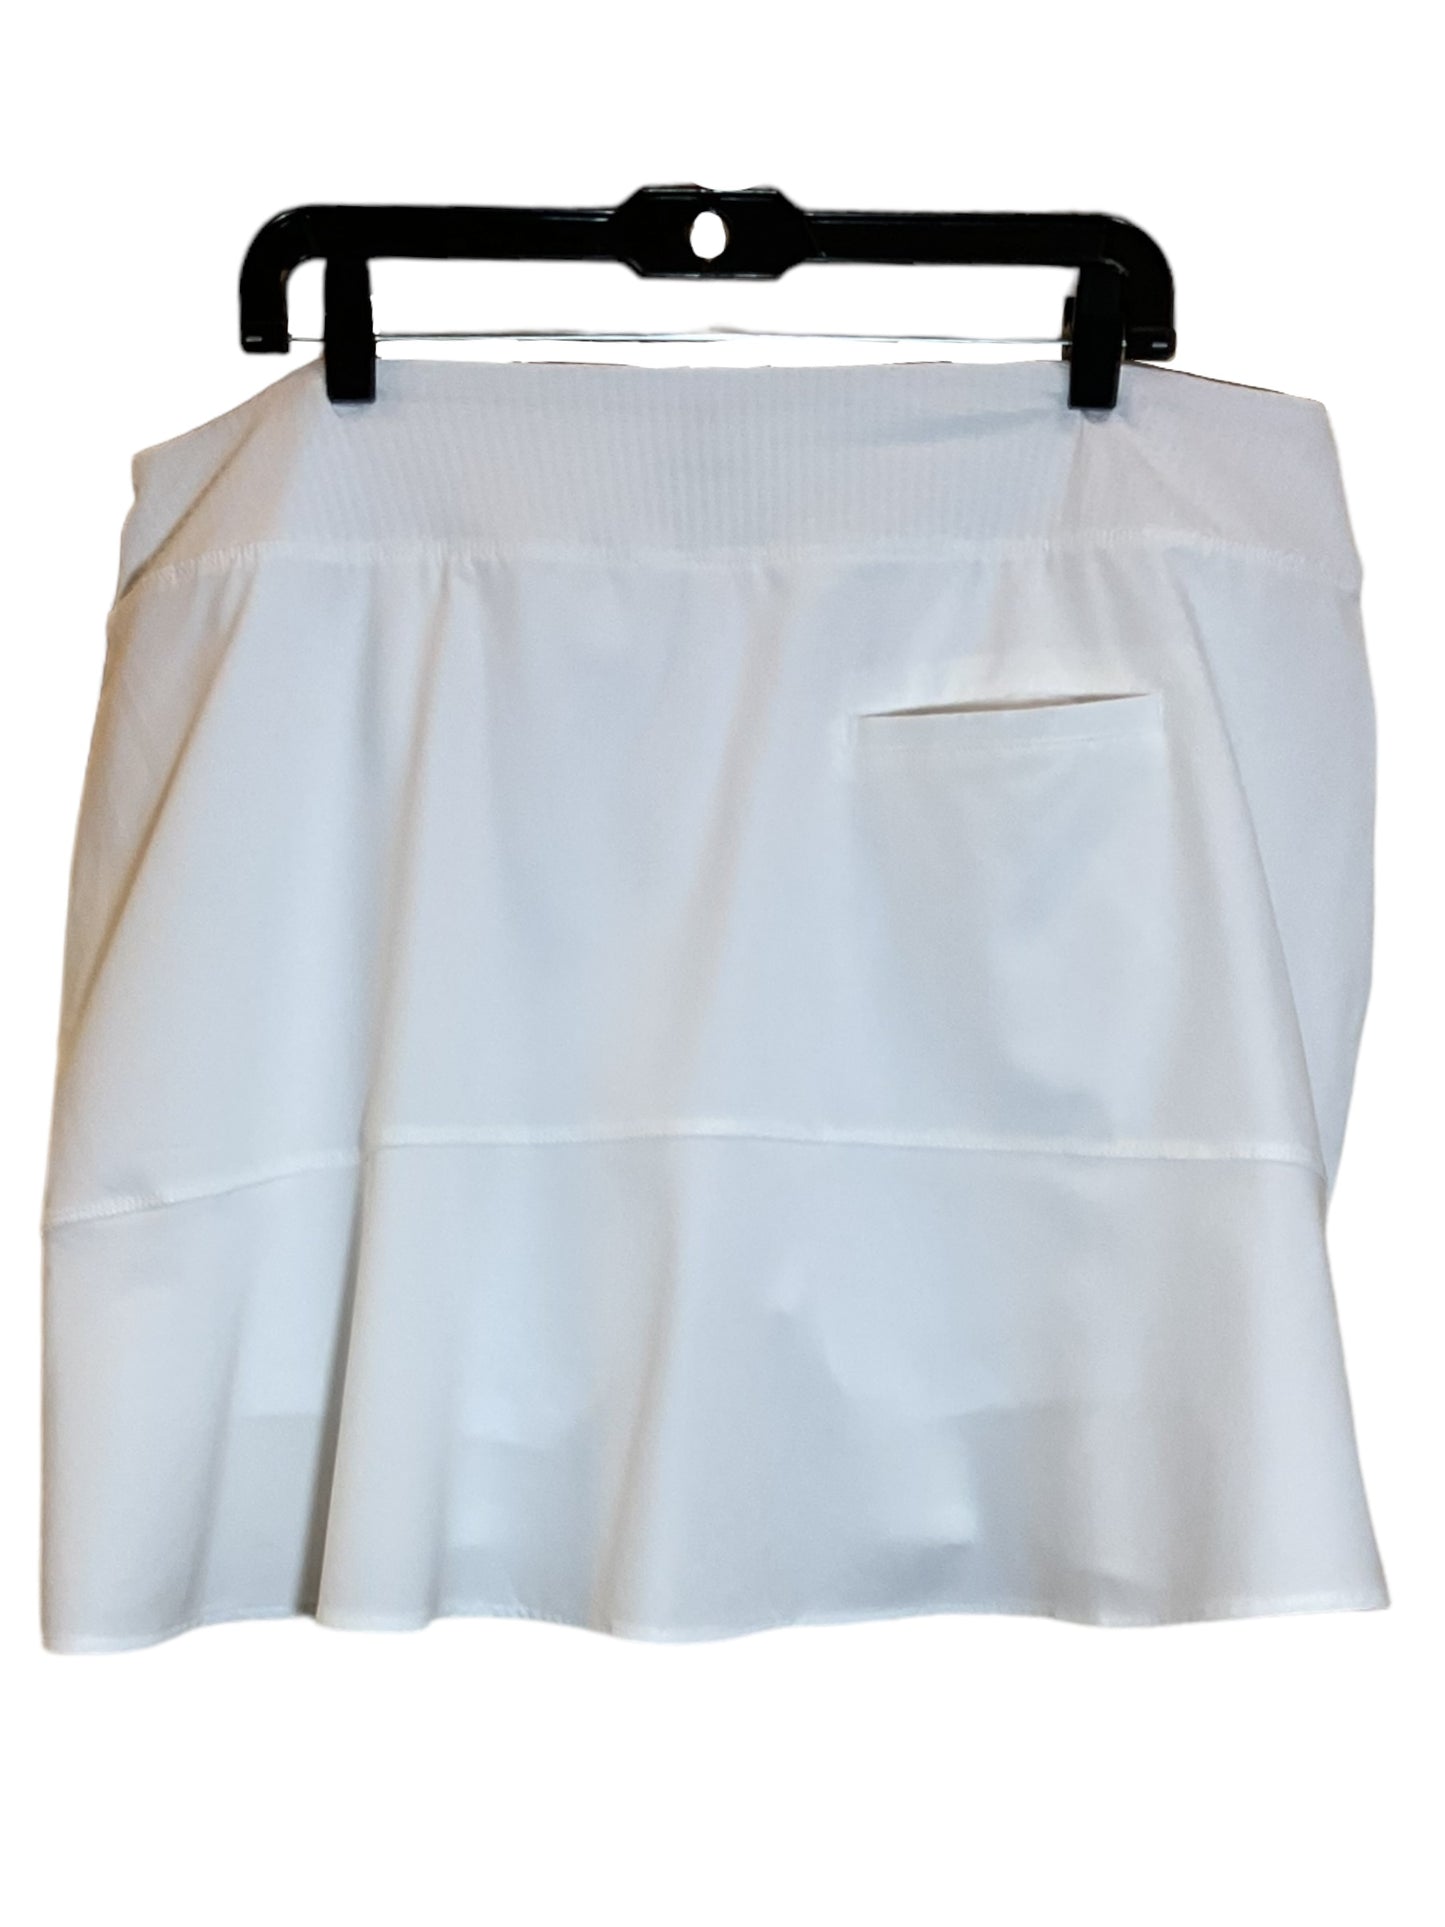 Athletic Skirt Skort By Adidas  Size: Xl